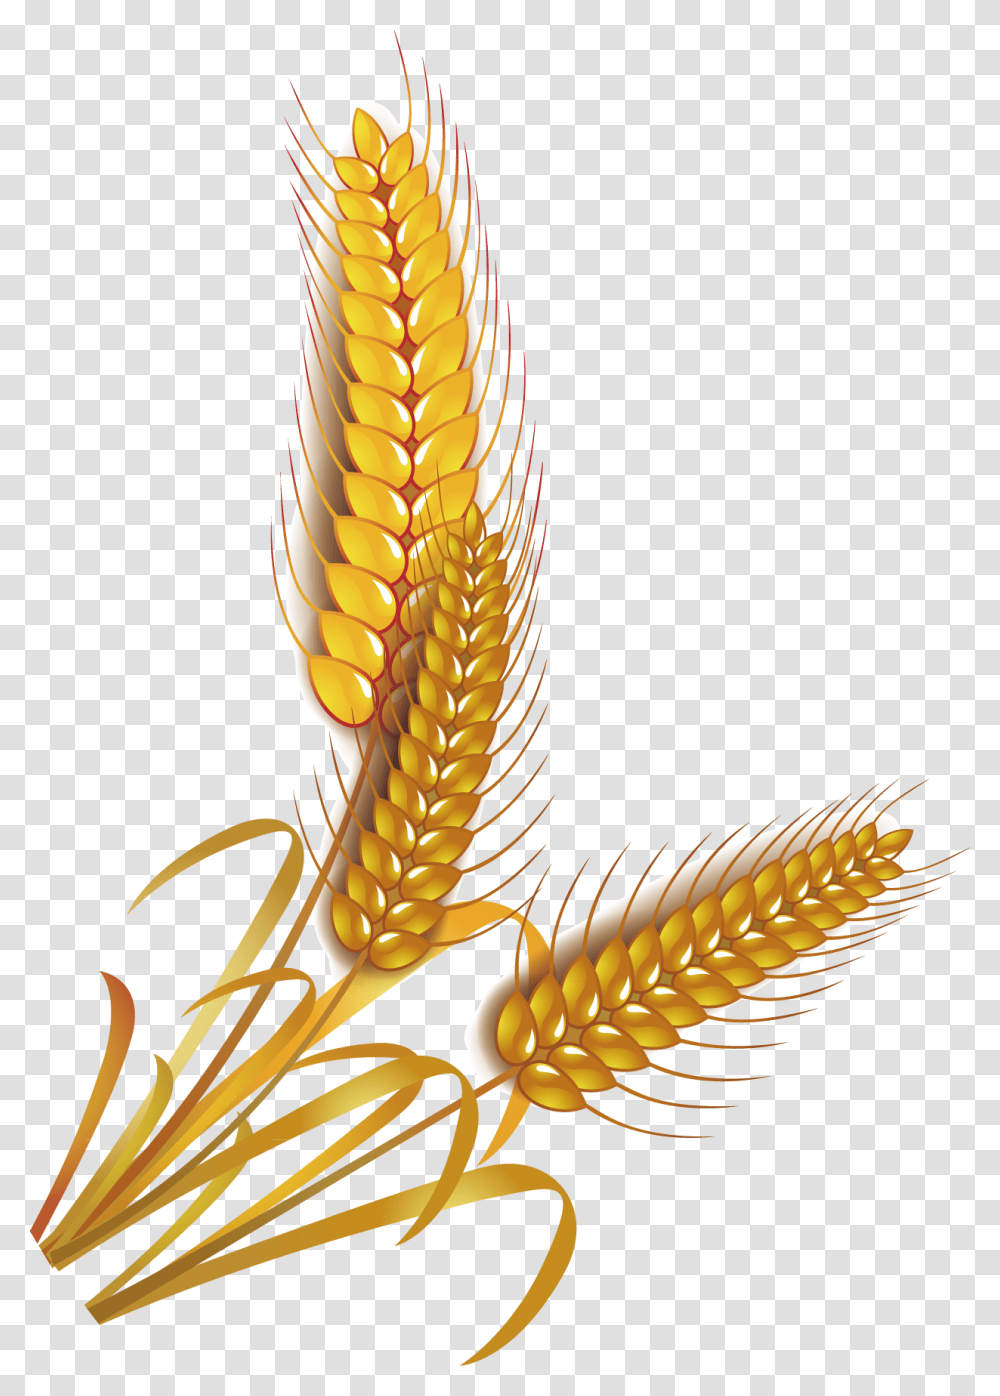 Wheat Rice Cereal Whole Grain Clip Art Grain Rice Vector, Plant, Vegetable, Food, Vegetation Transparent Png